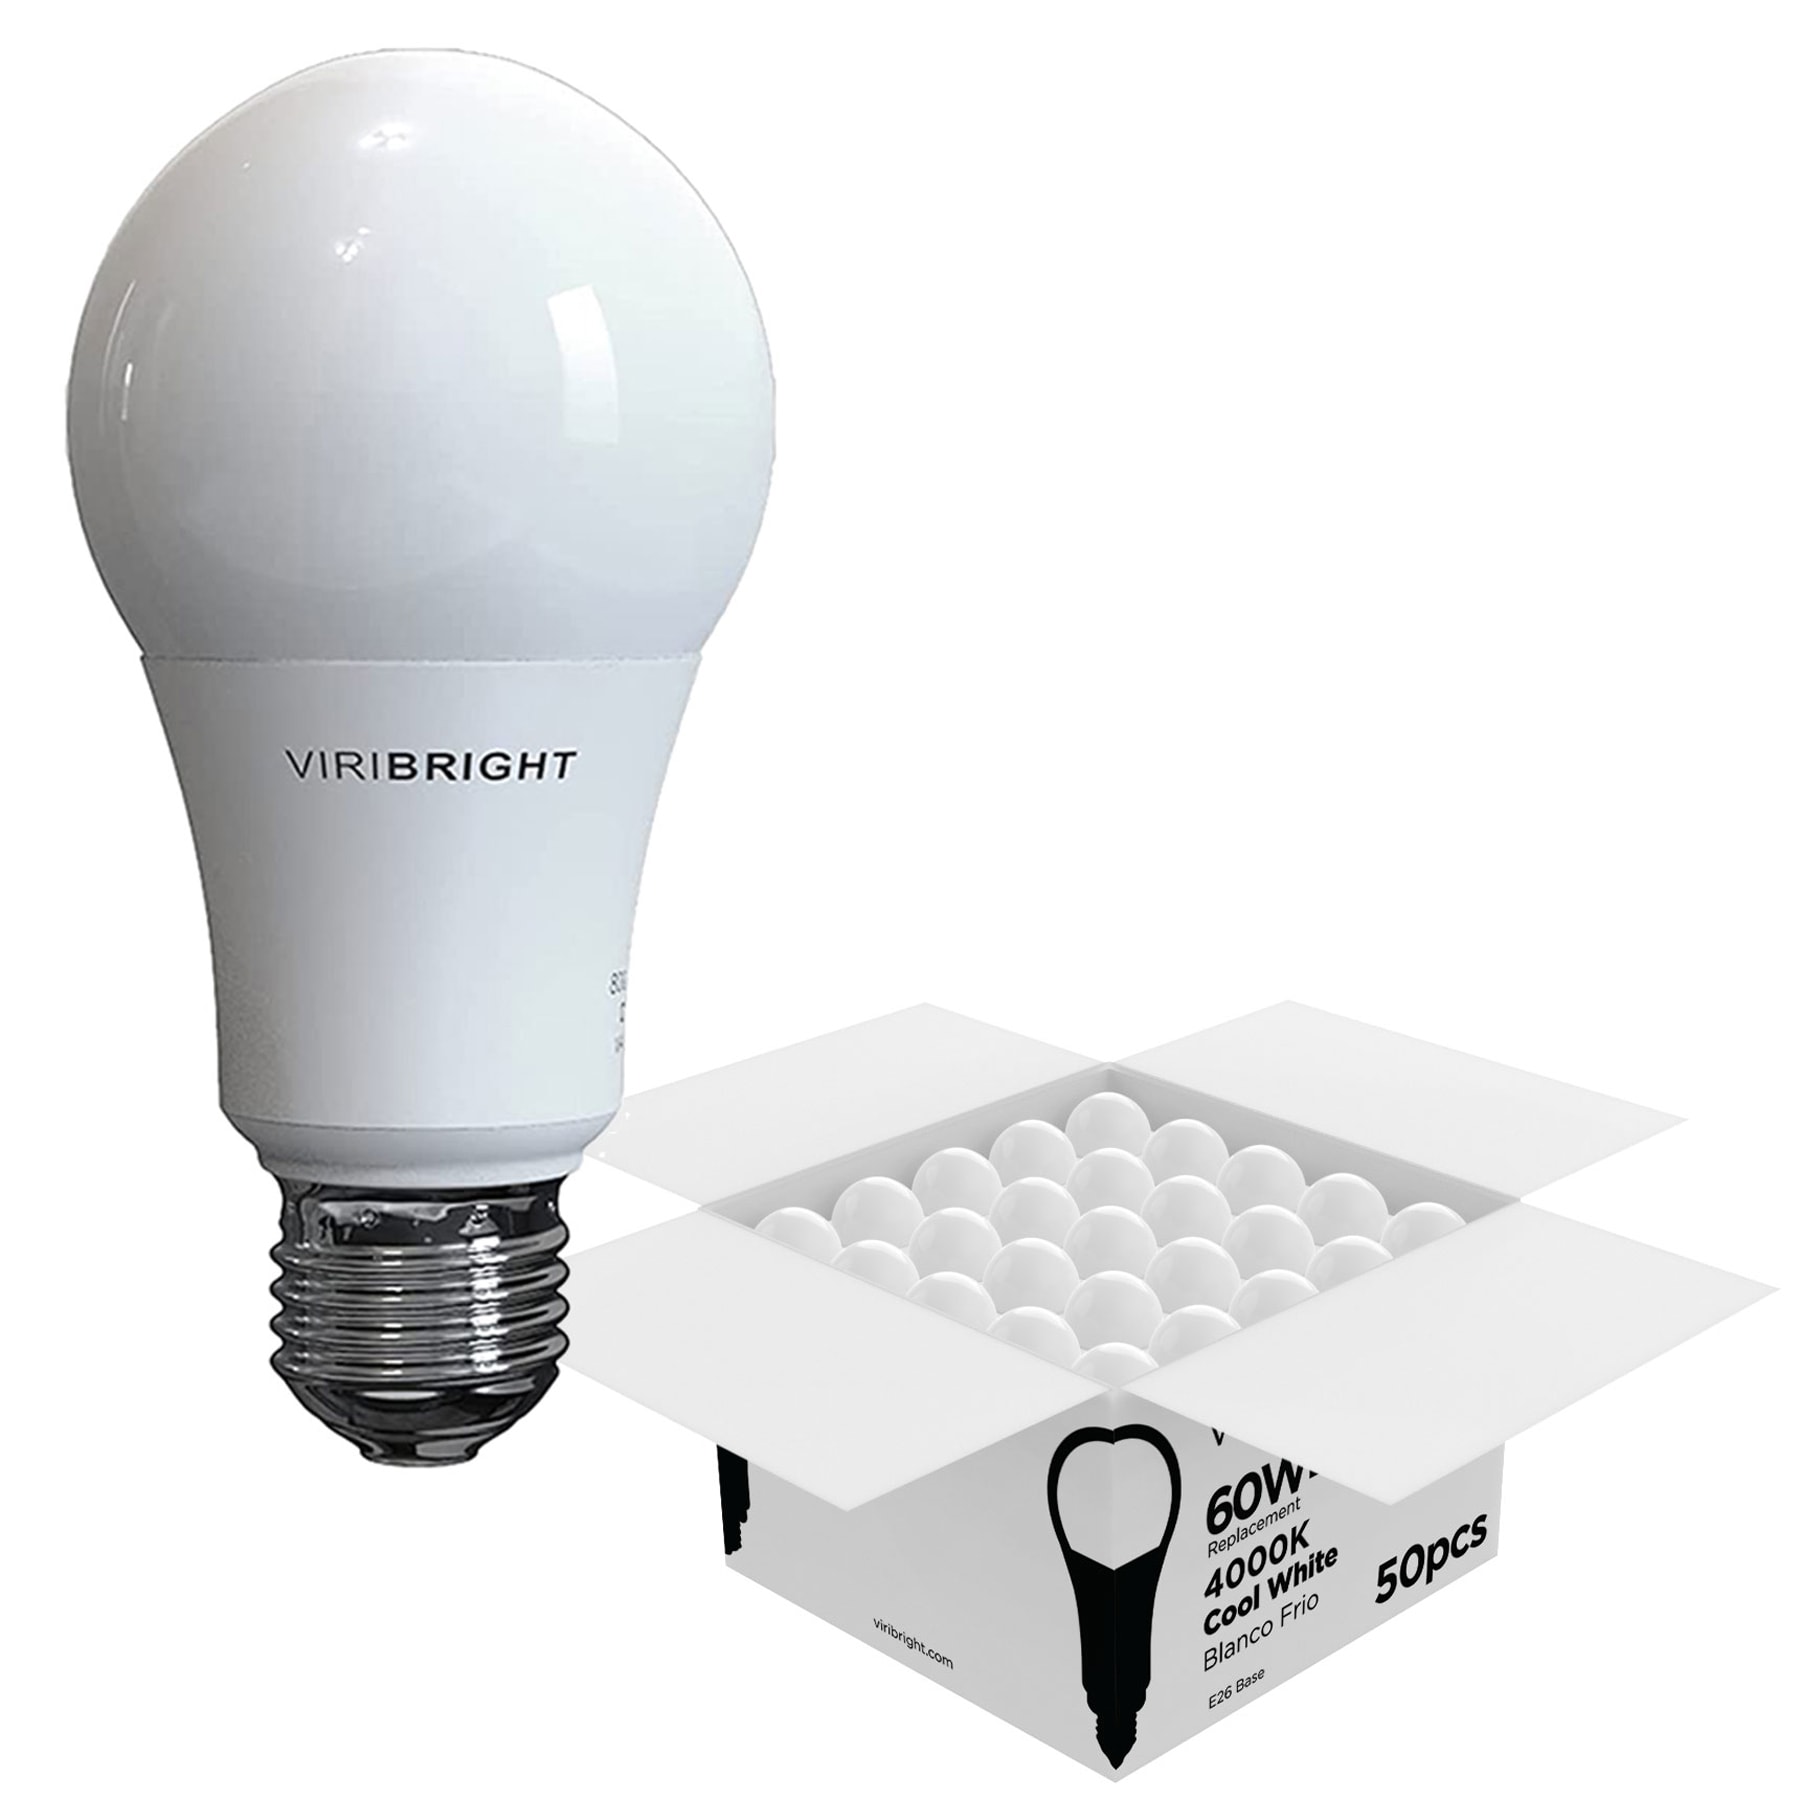 Cool White Light Bulbs at